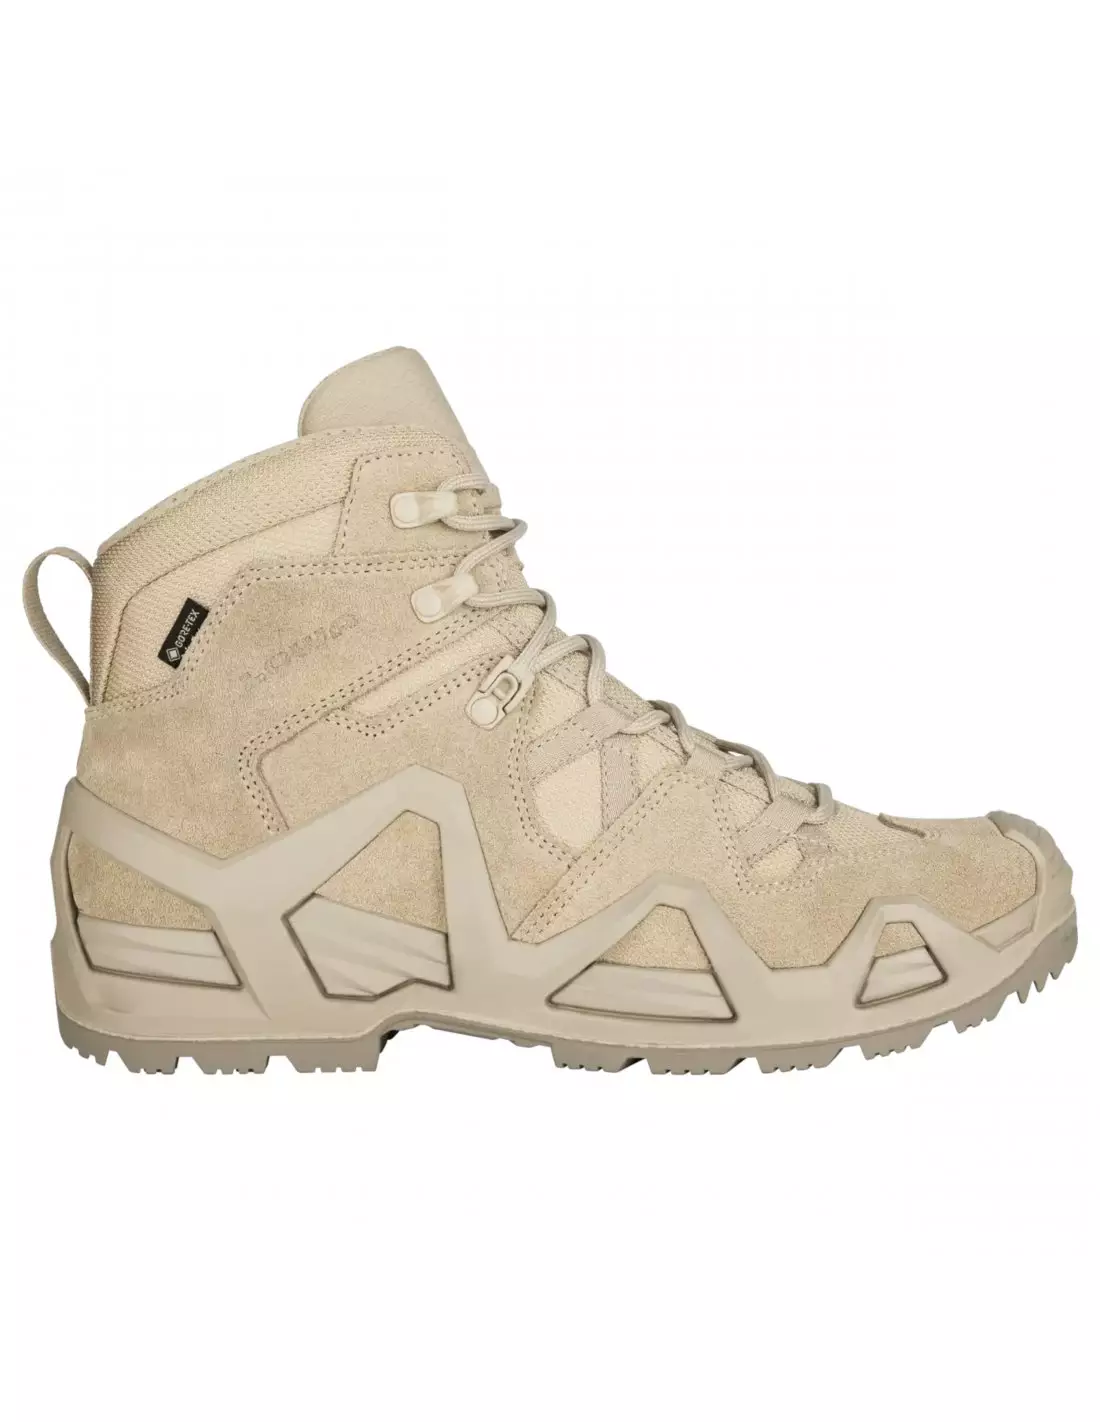 LOWA® ZEPHYR MK2 GTX MID Tactical Boots - Desert